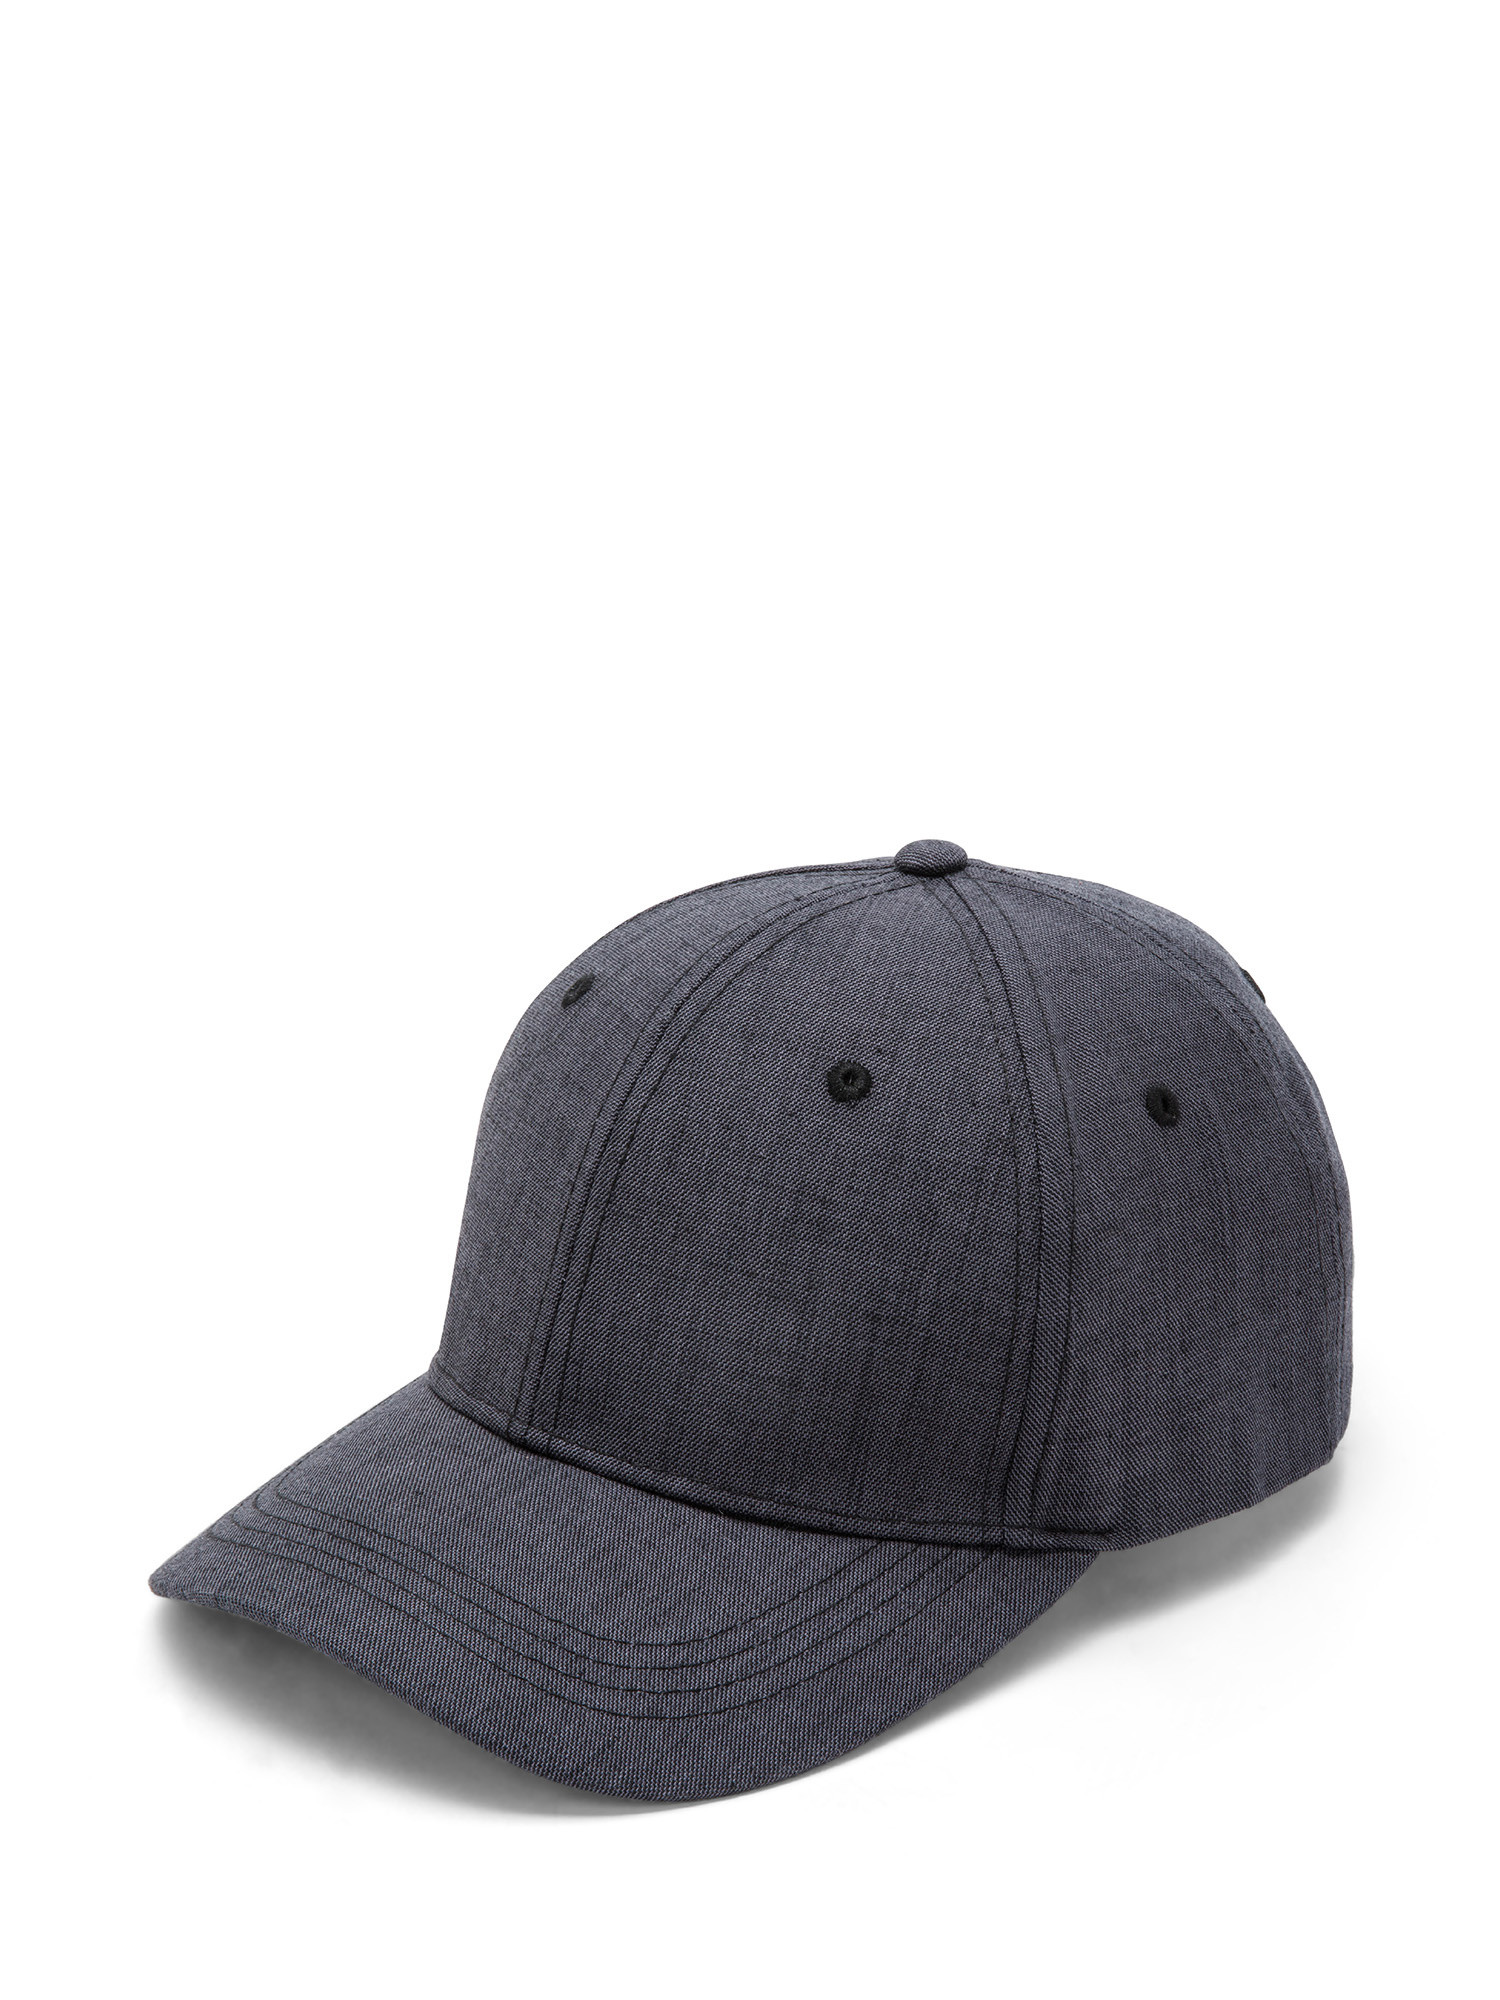 Luca D'Altieri - Cotton baseball cap, Dark Blue, large image number 0